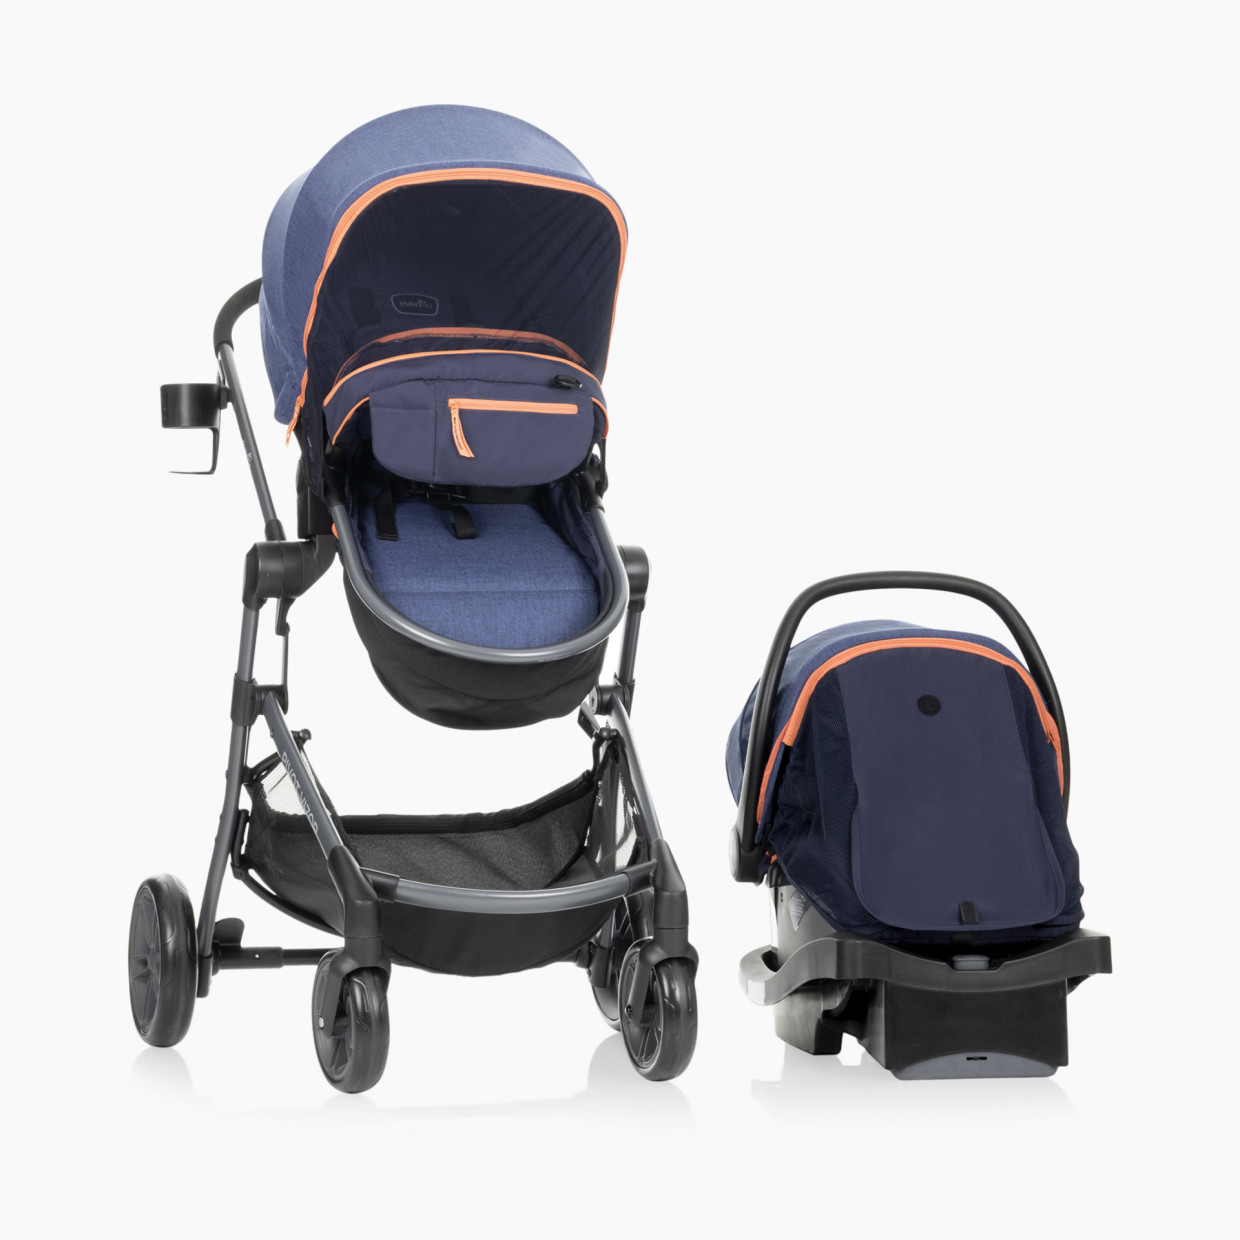 Evenflo Pivot Vizor Travel System with LiteMax Infant Car Seat - Promenade Blue.